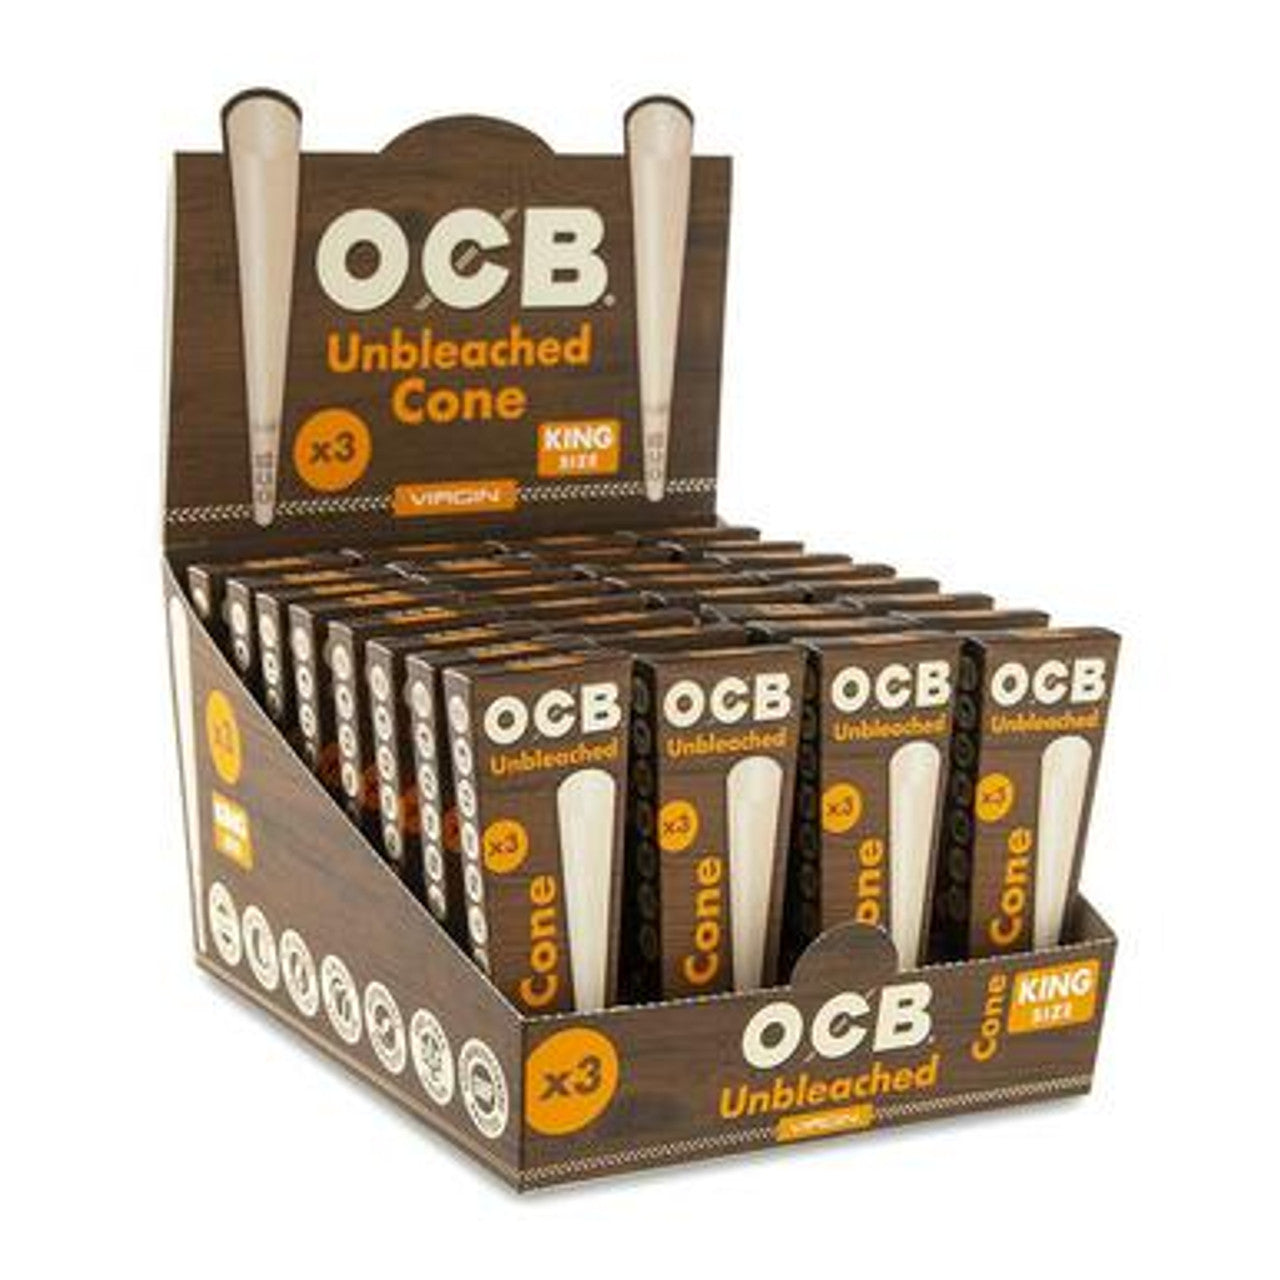 OCB OCB Virgin Unbleached King Size Cones - 32ct